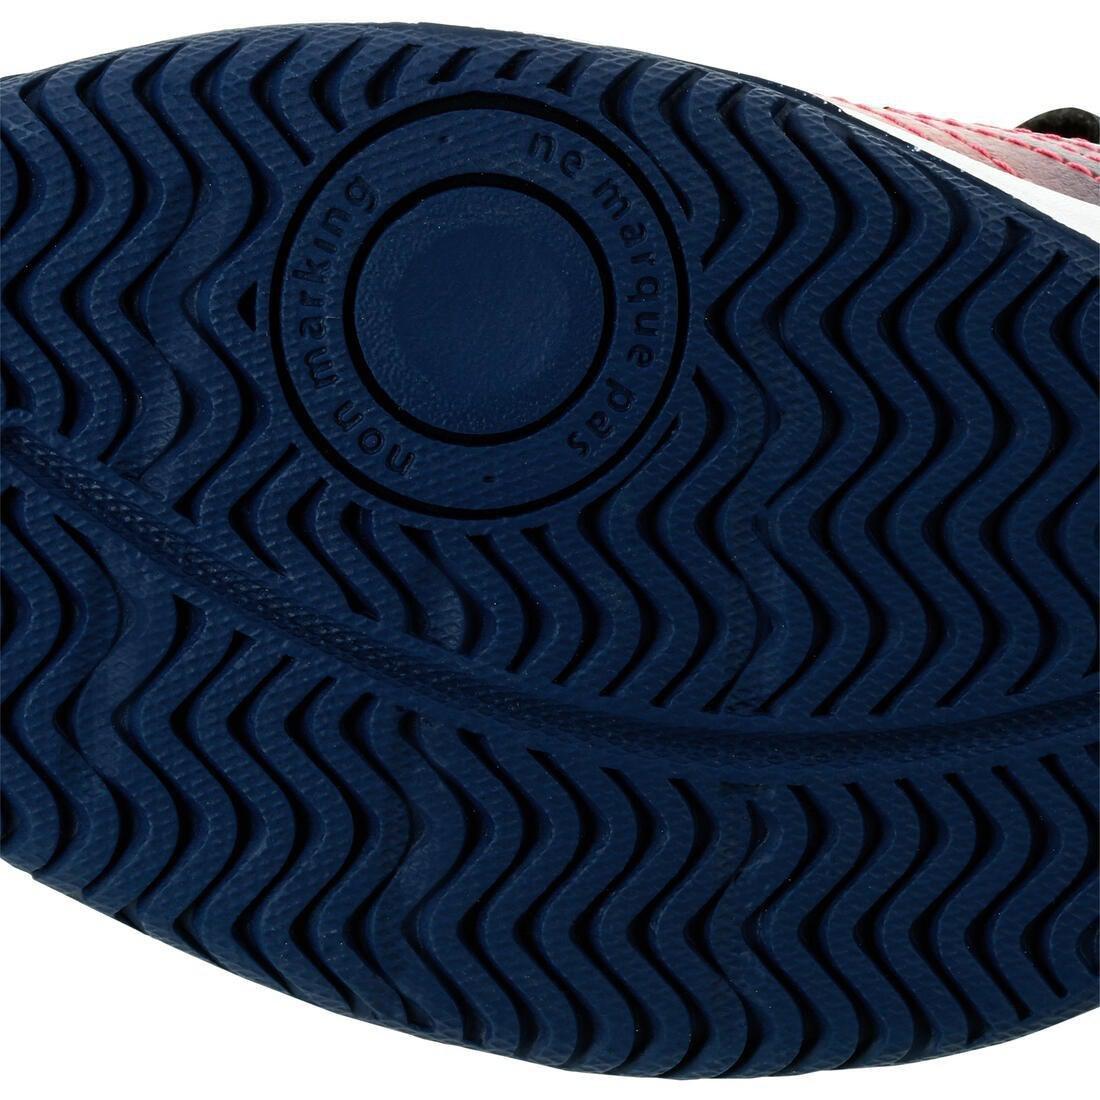 DECATHLON - Kids Tennis Shoes - Ts160, Blue